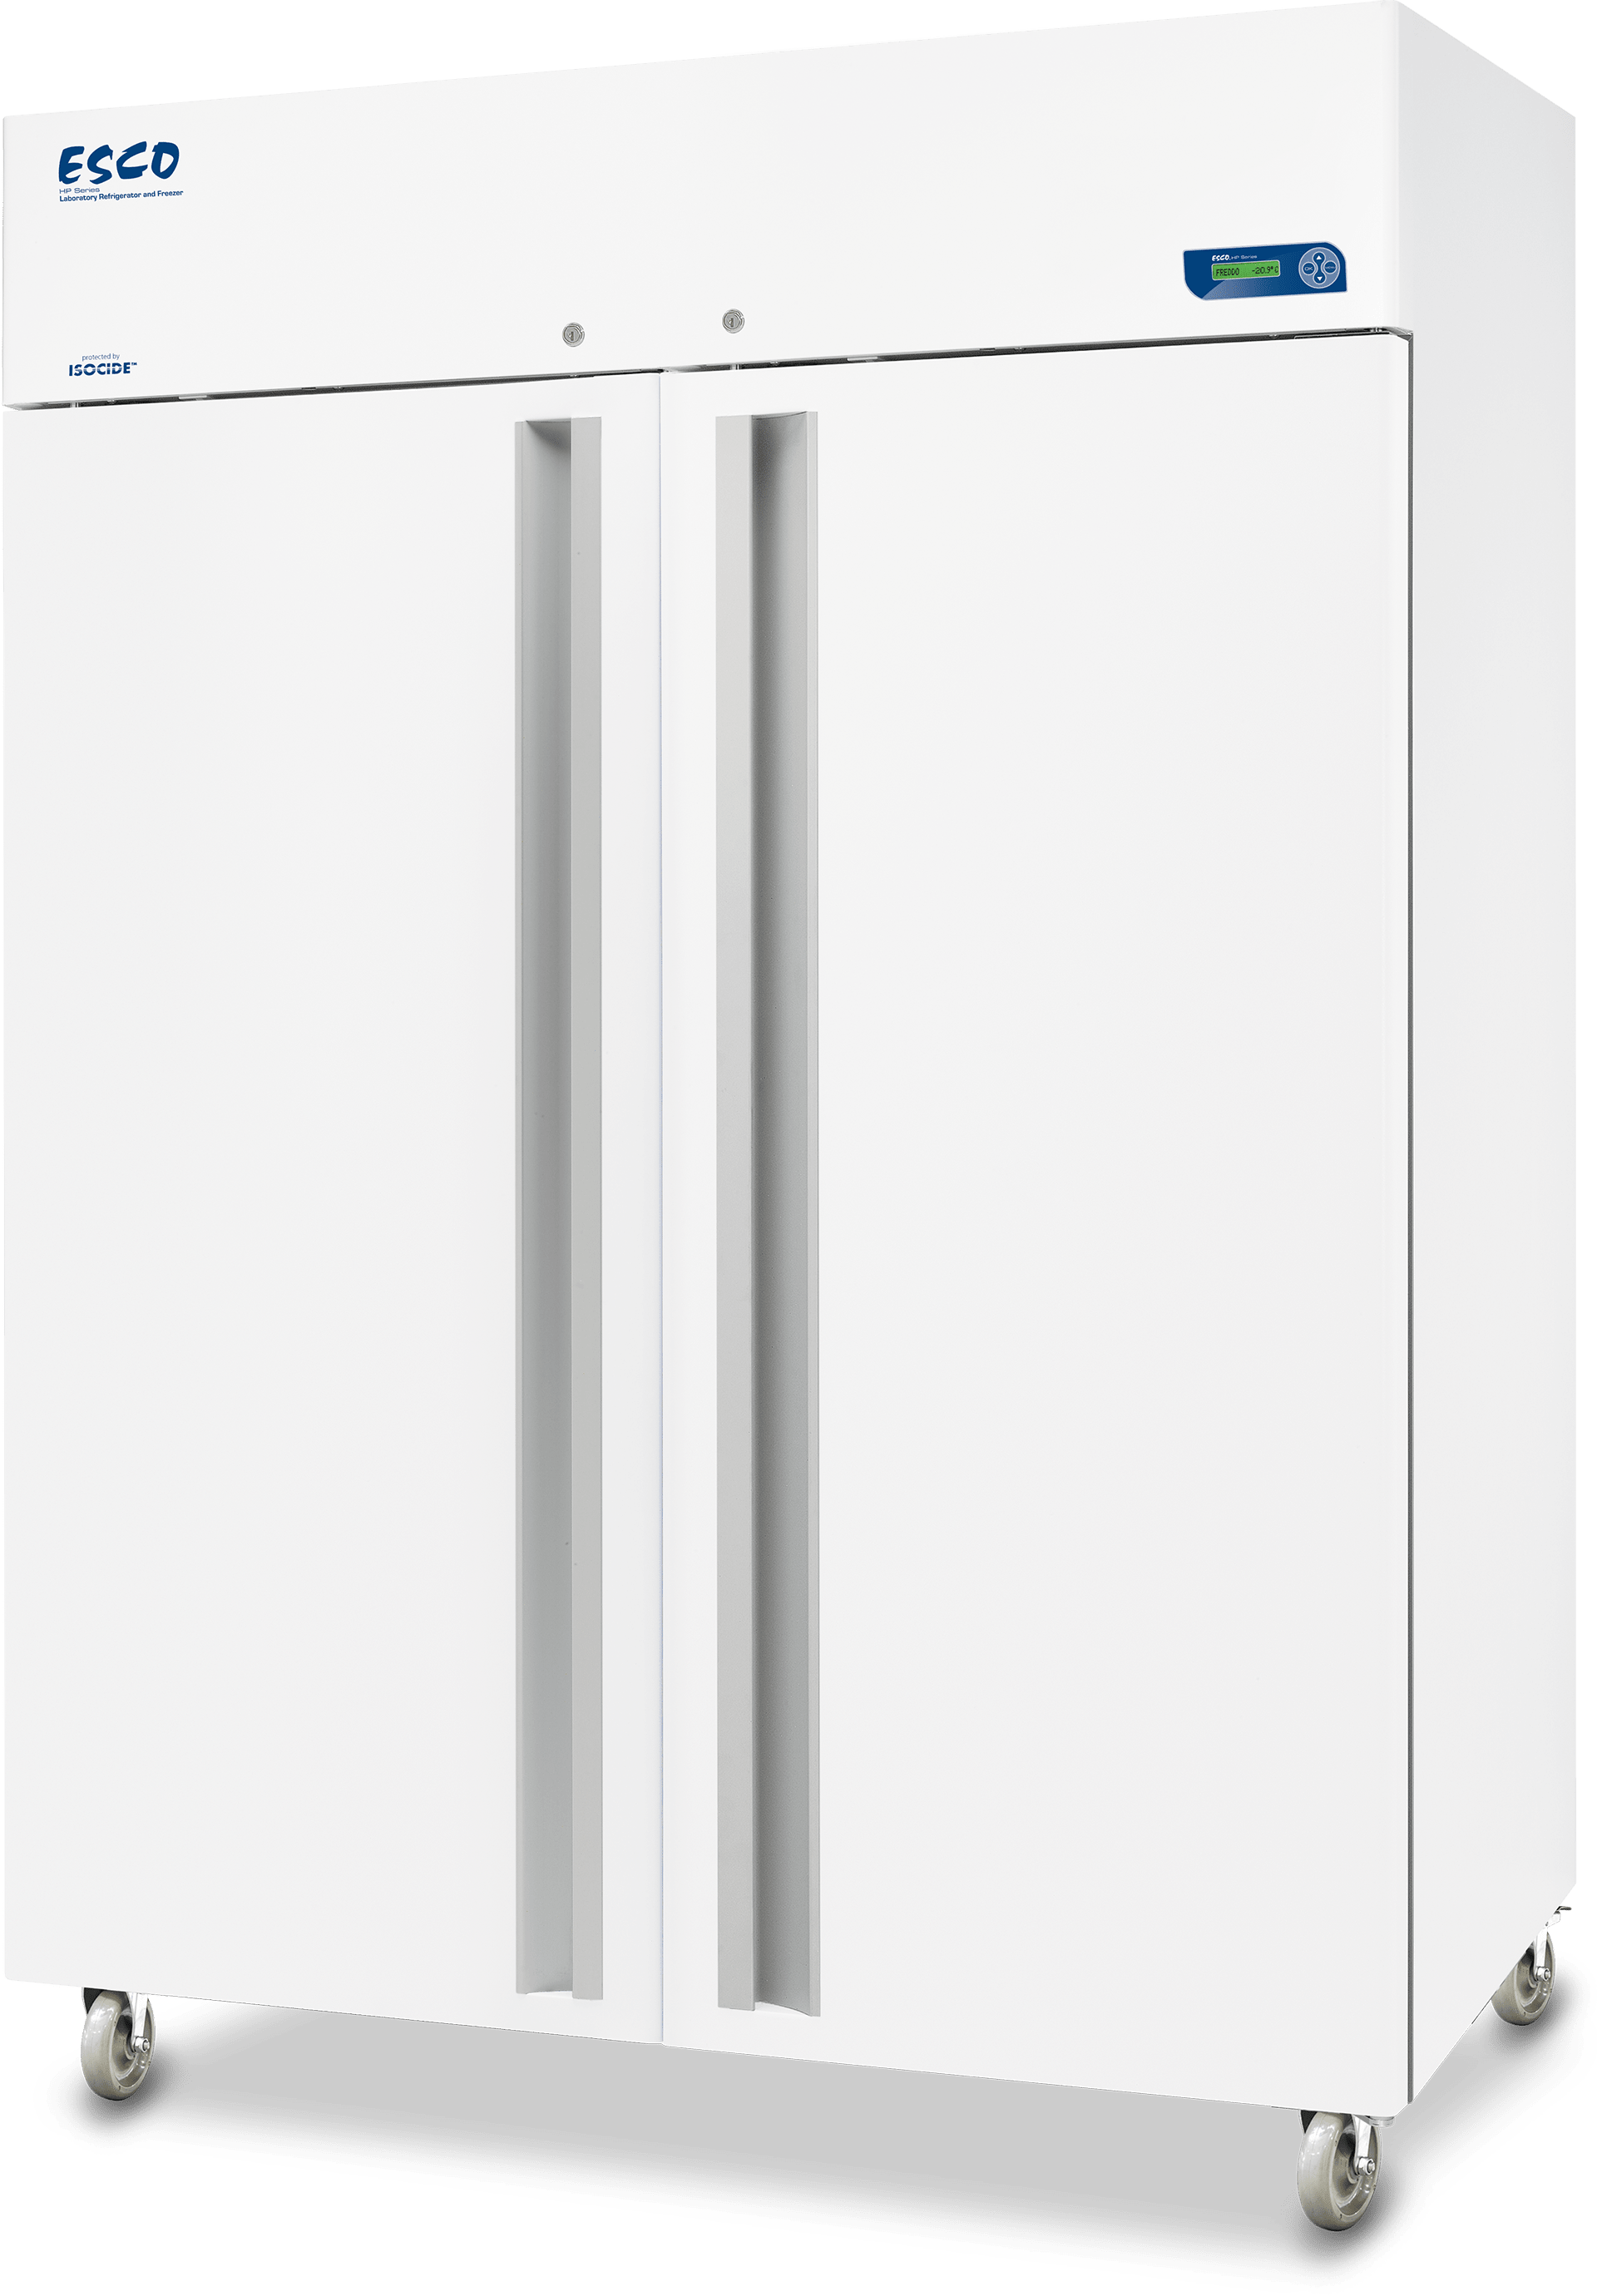 Escali NSF Refrigerator/Freezer Thermometer - Fante's Kitchen Shop - Since  1906